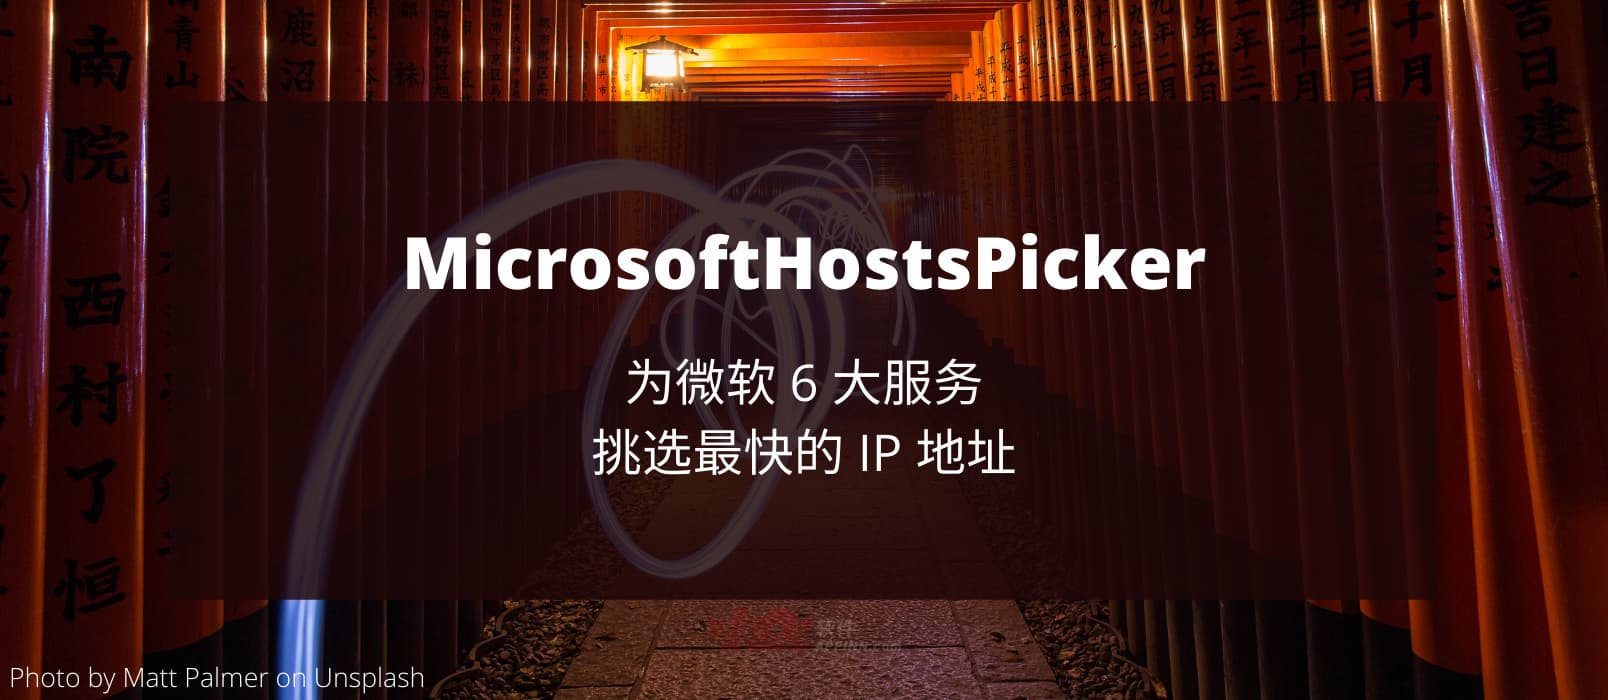 MicrosoftHostsPicker - 优选 IP 地址，解决 6 大「微软服务」连接缓慢问题